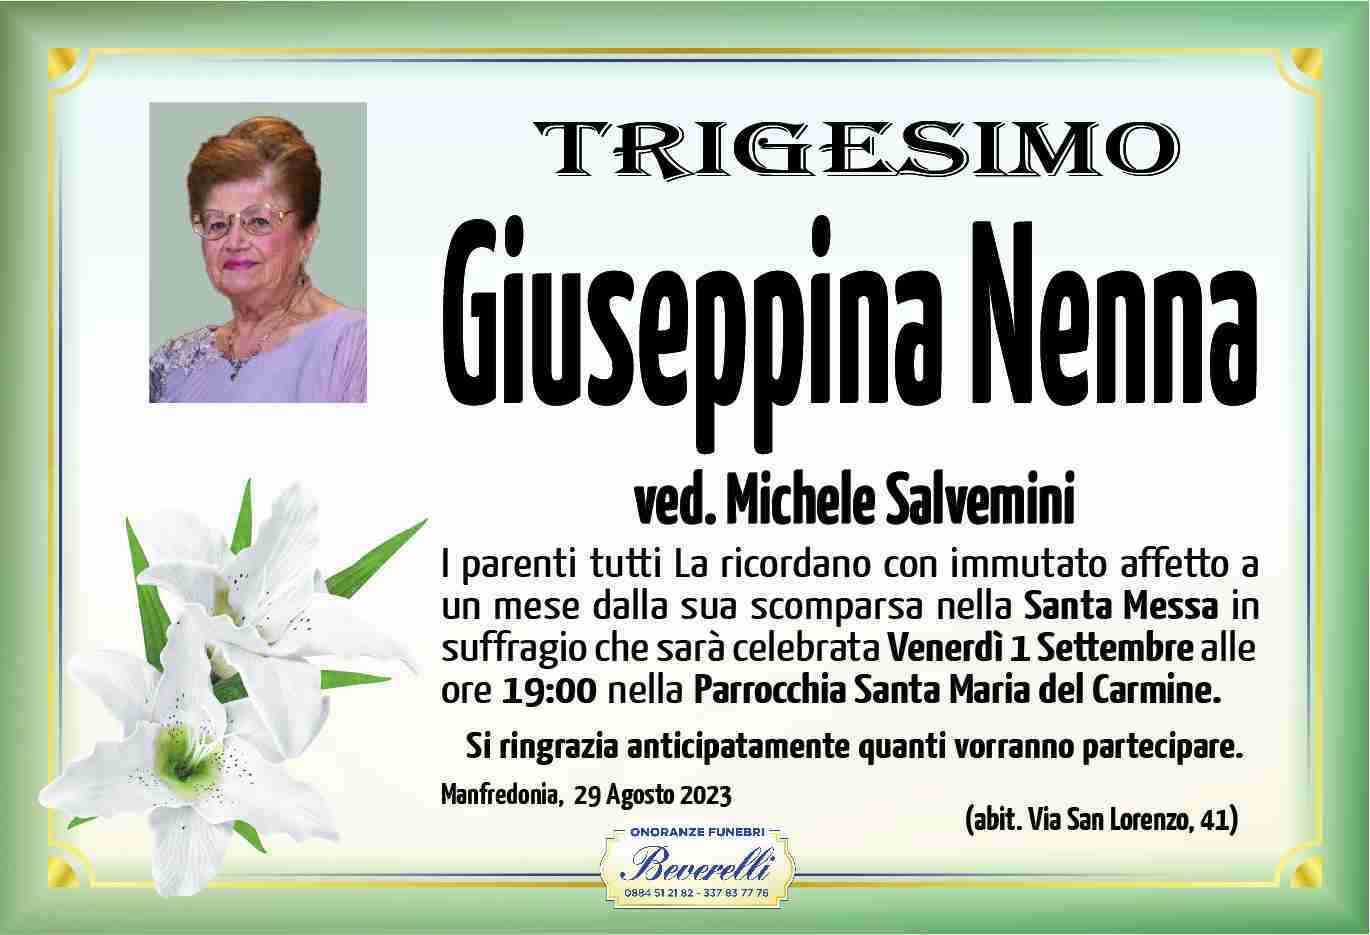 Giuseppina Nenna